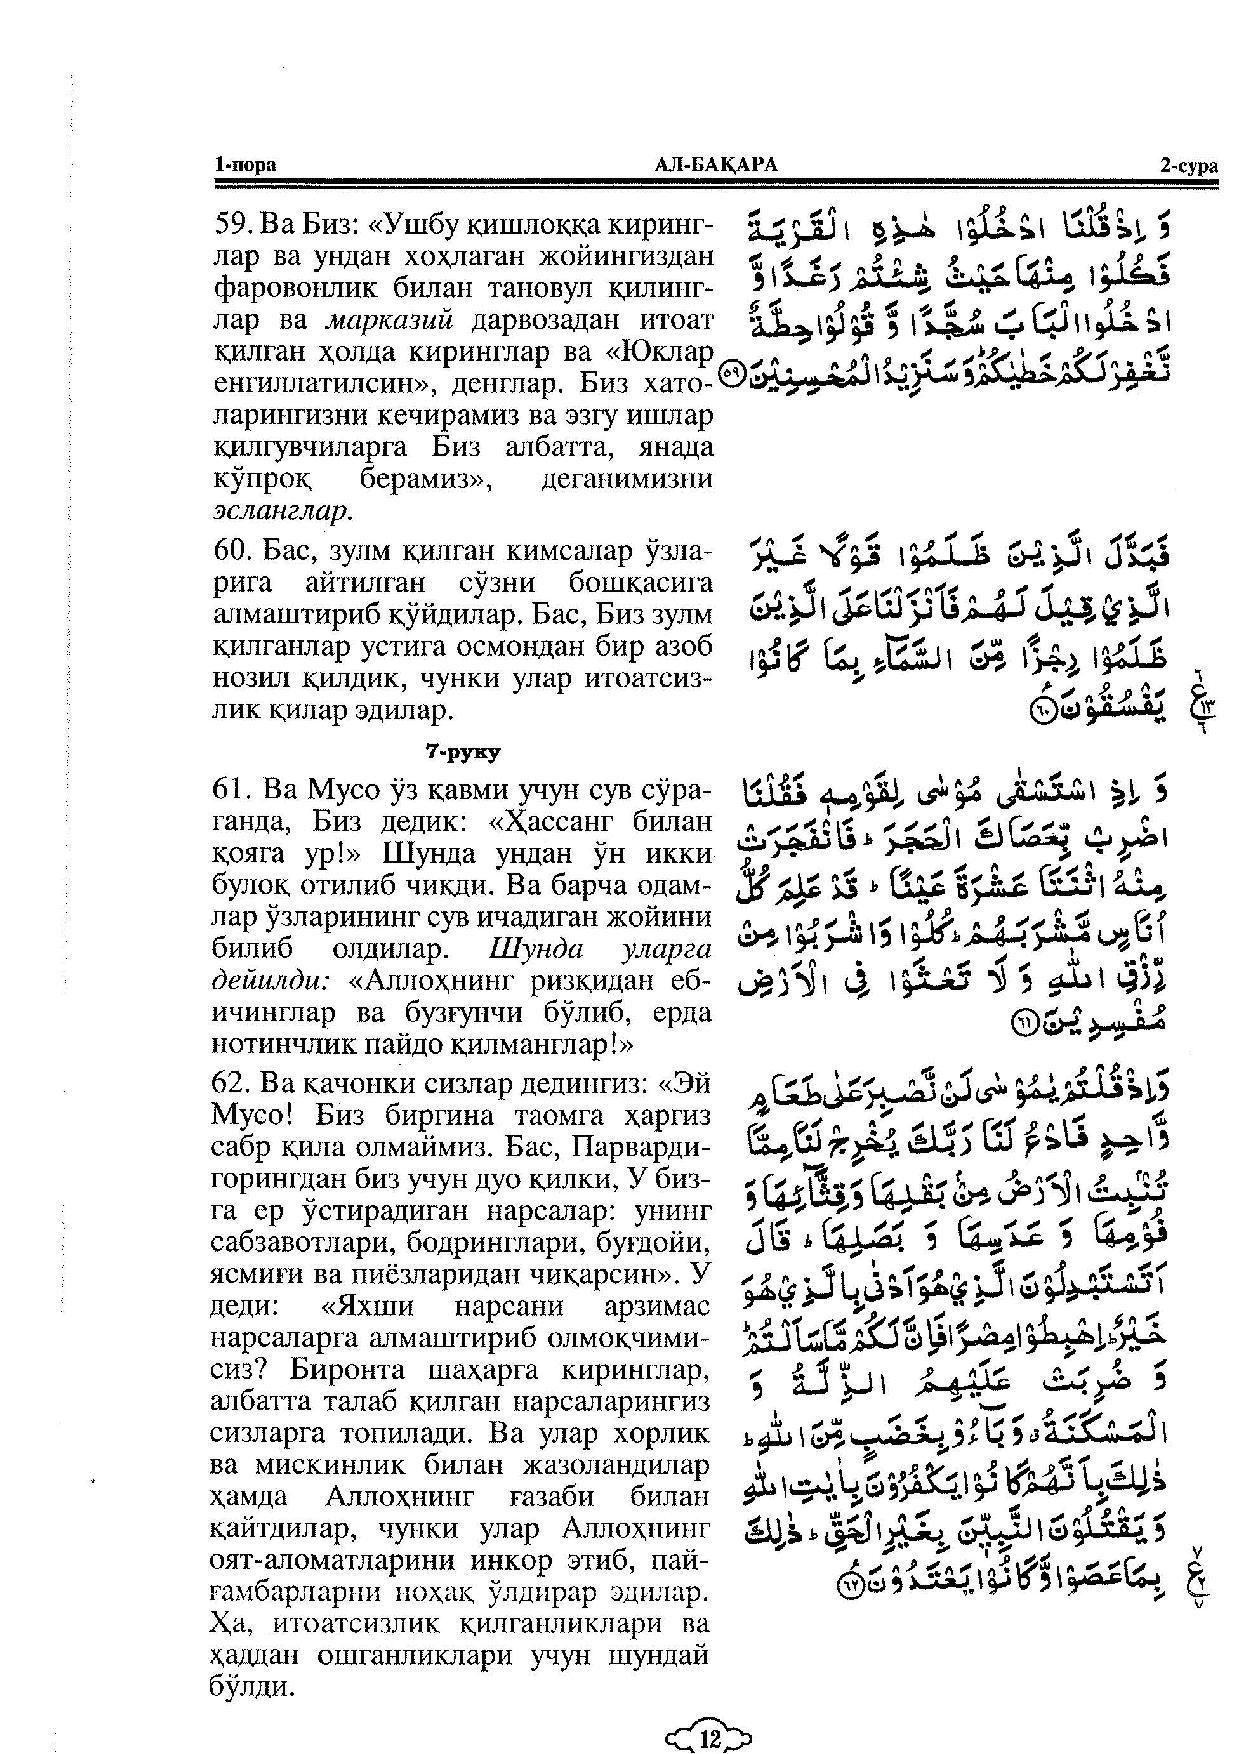 002-al-baqarah-page-010